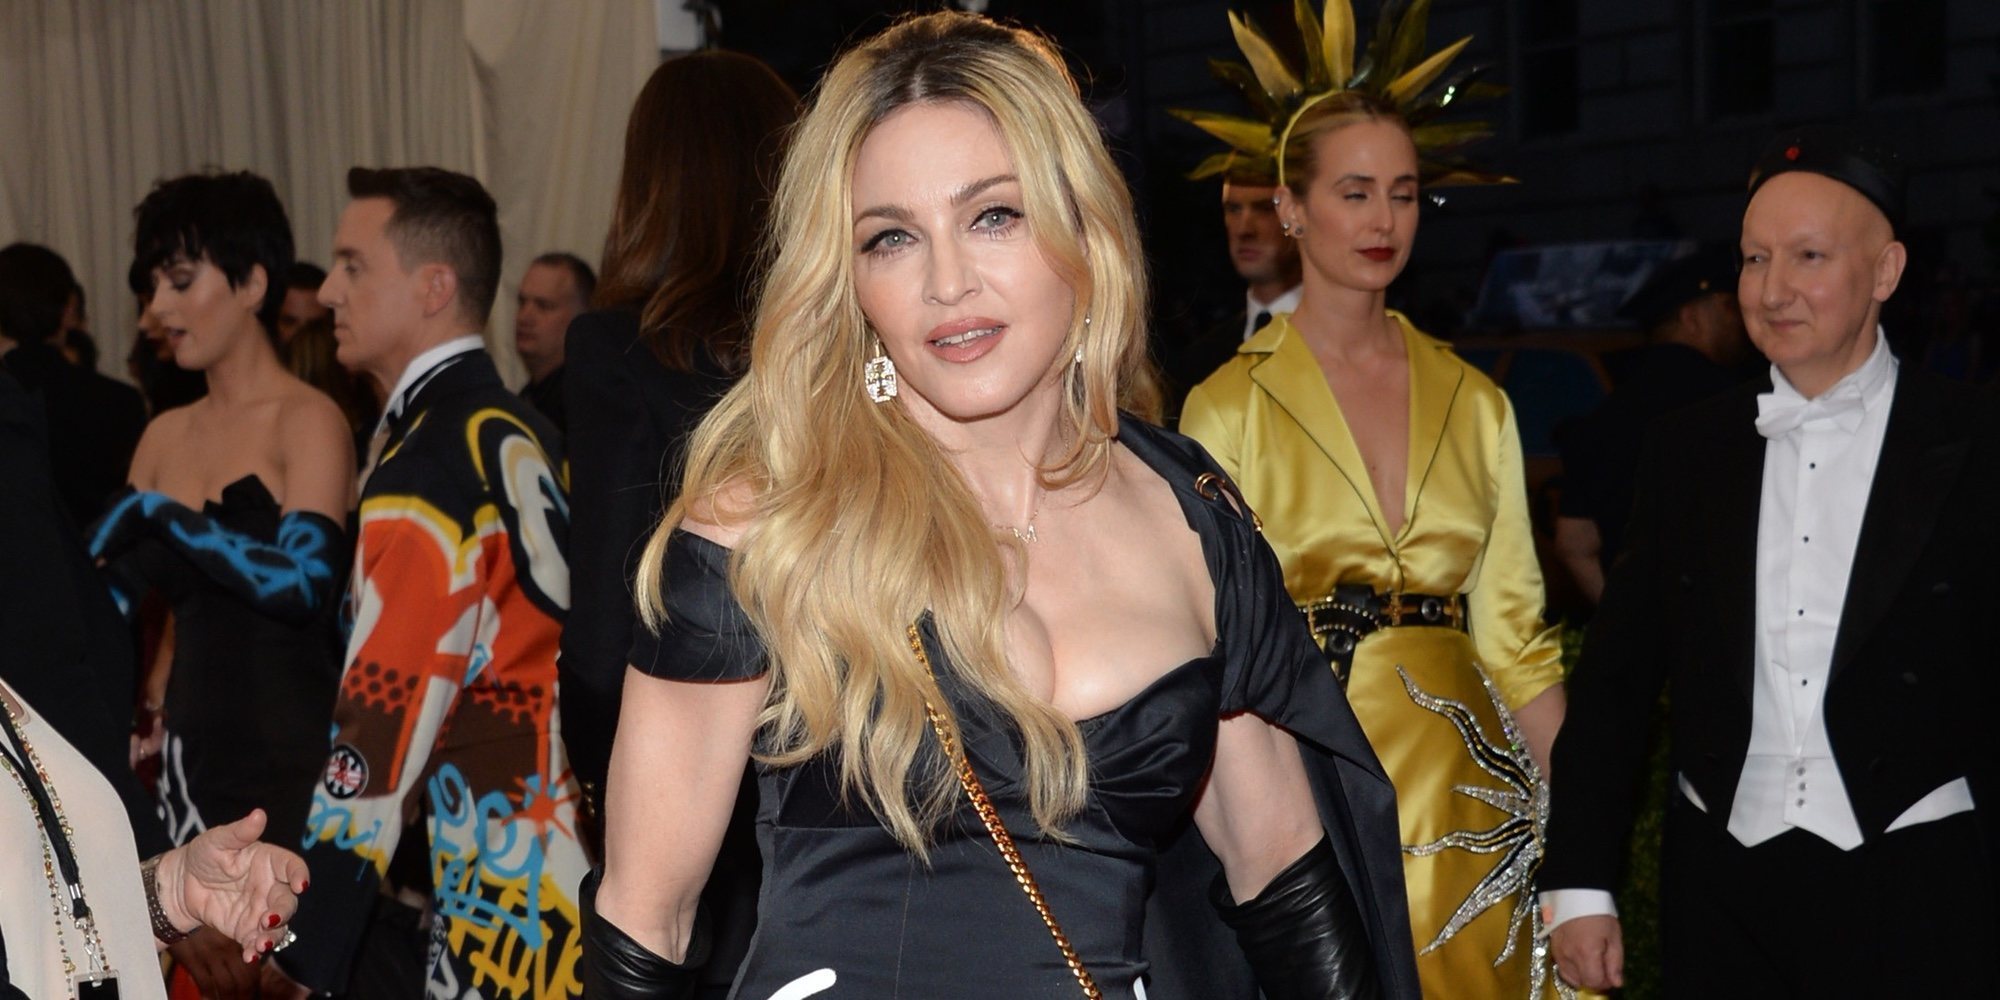 La bronca de Madonna a su equipo: "Sois idiotas e imbéciles"